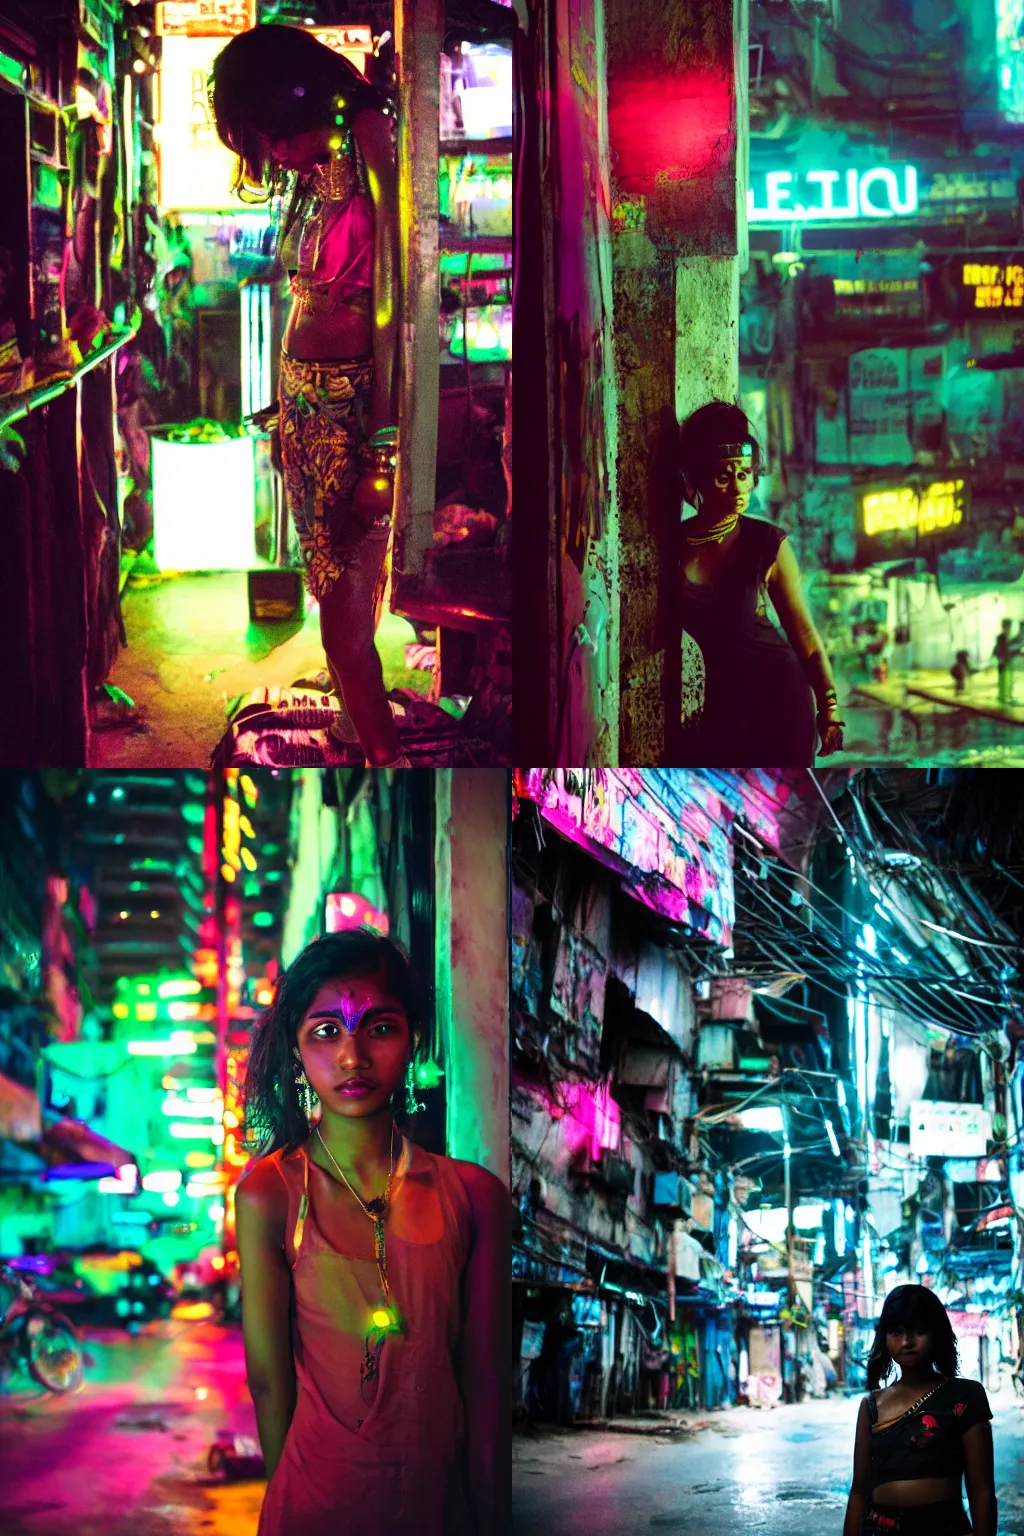 Prompt: cyberpunk sri lankan girl, neon lights in the background, photograph, 35mm lens